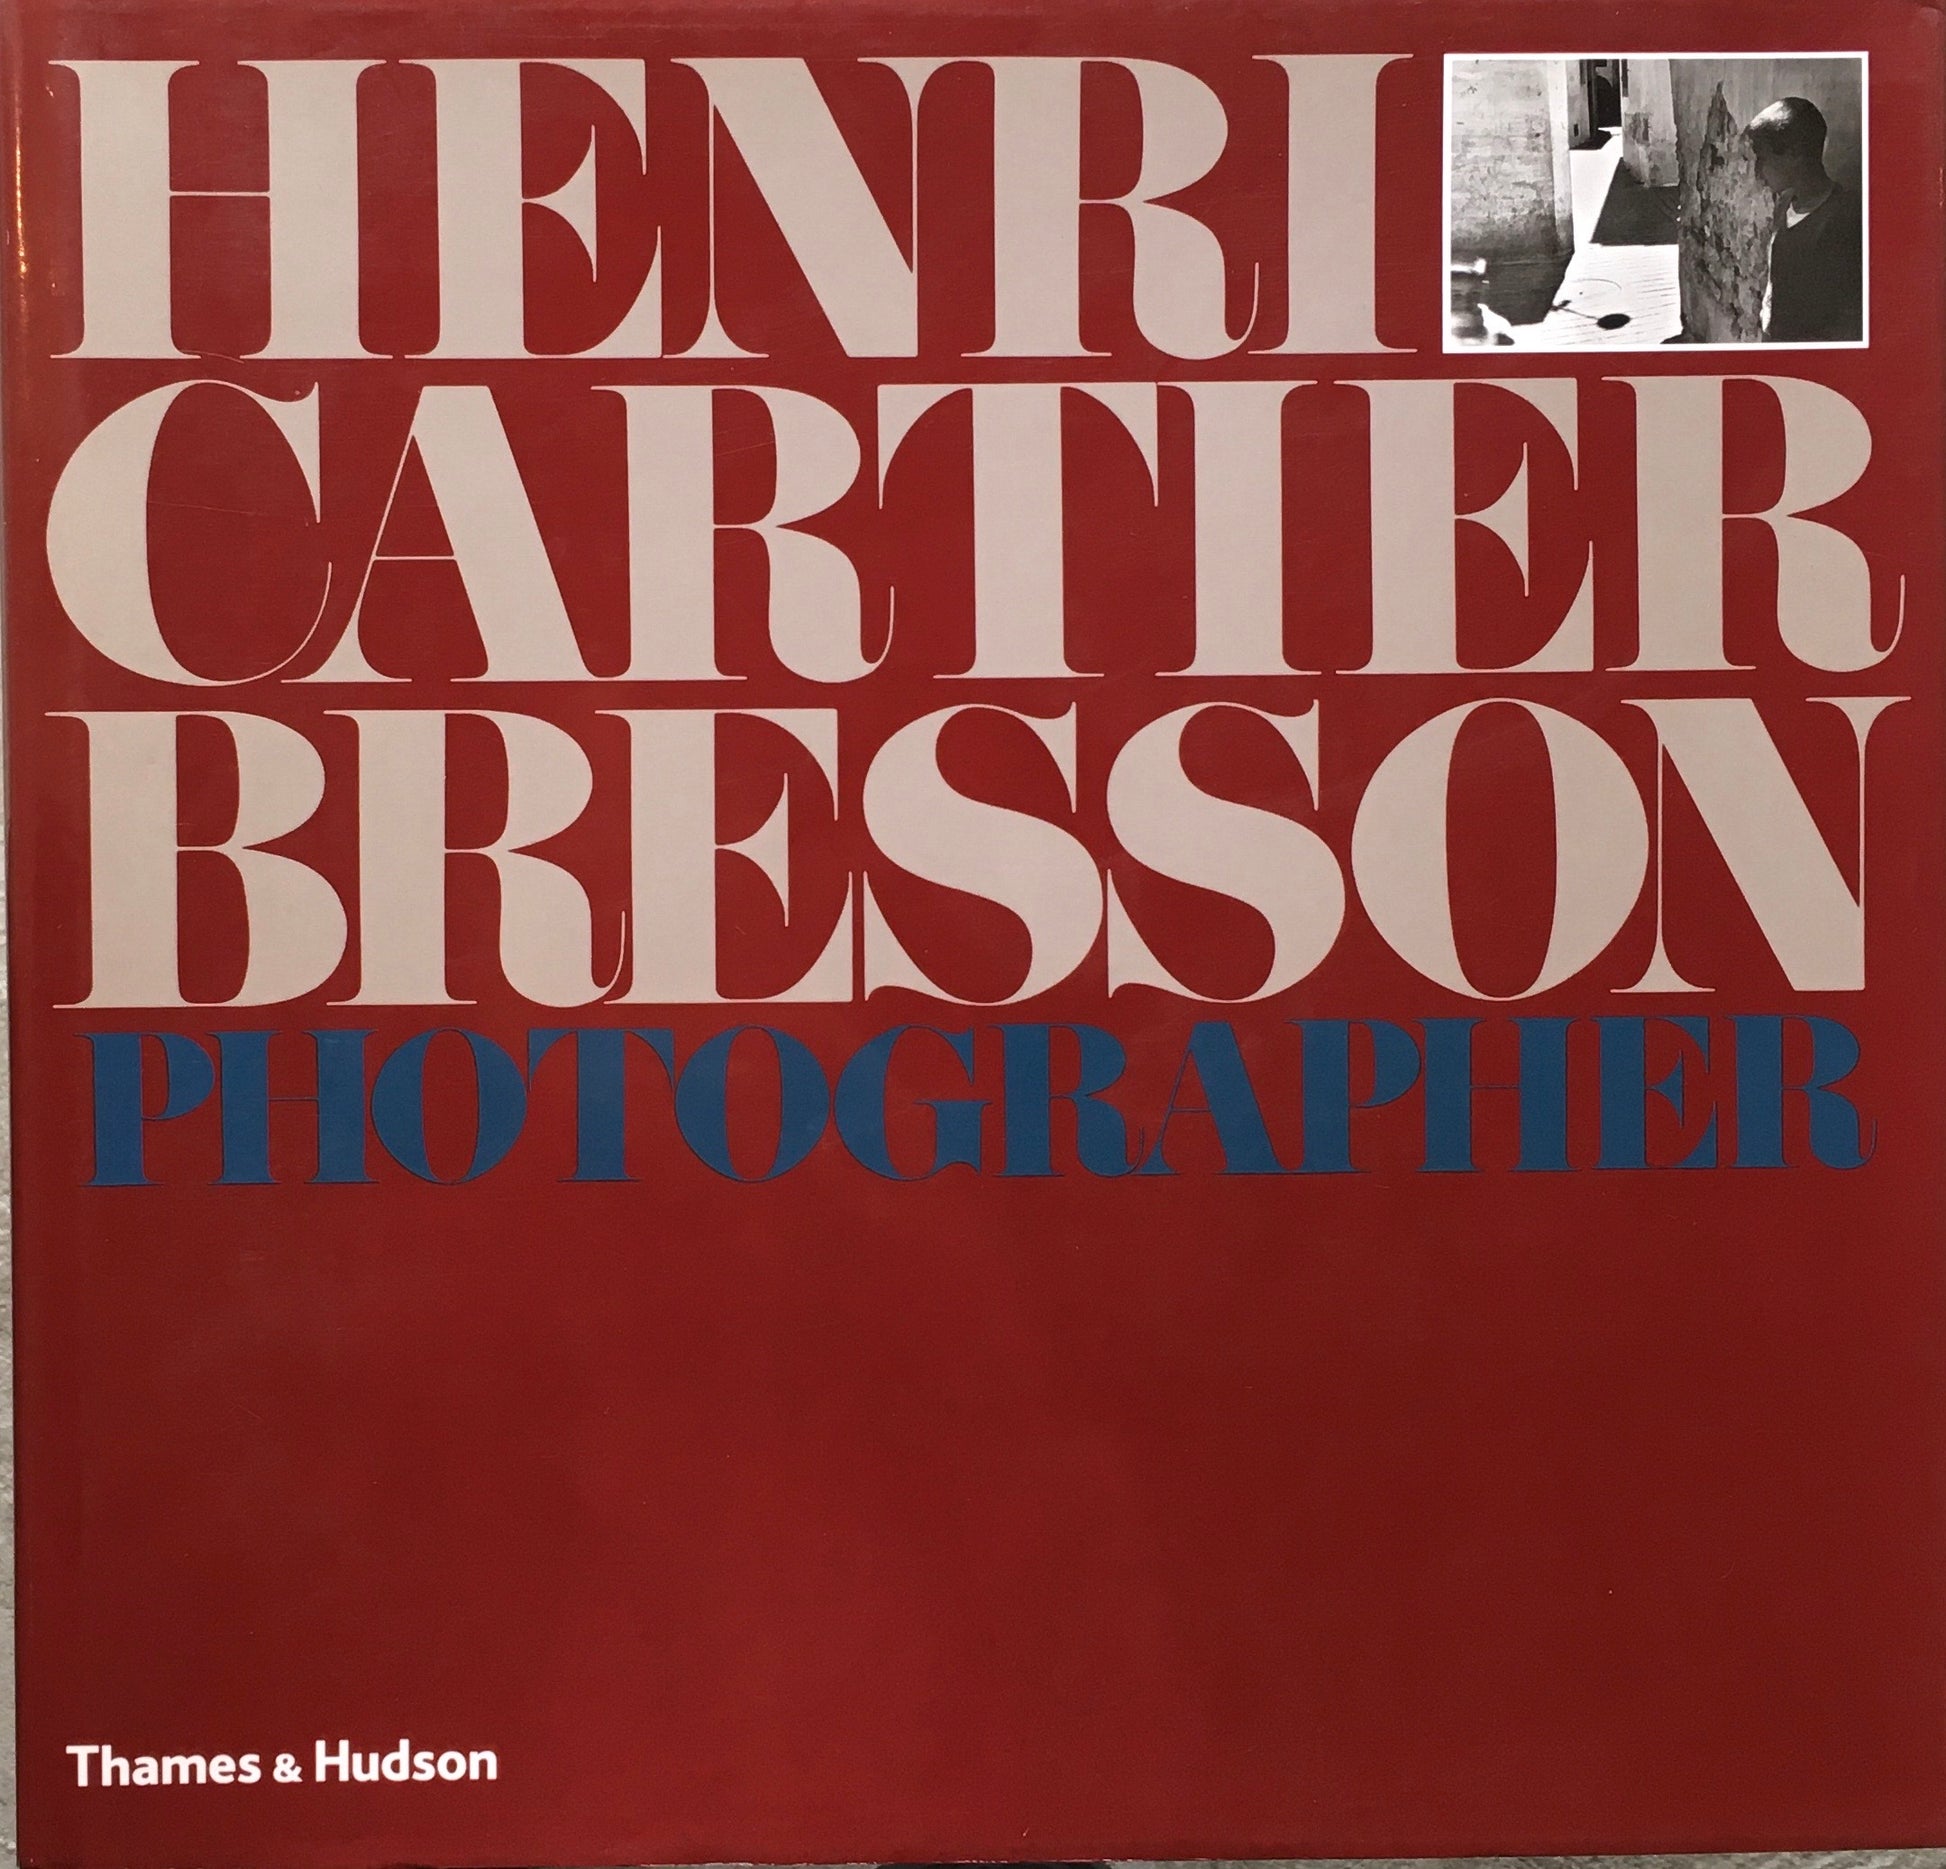 Henri Cartier-Bresson: Photographer　アンリ・カルティエ・ブレッソン